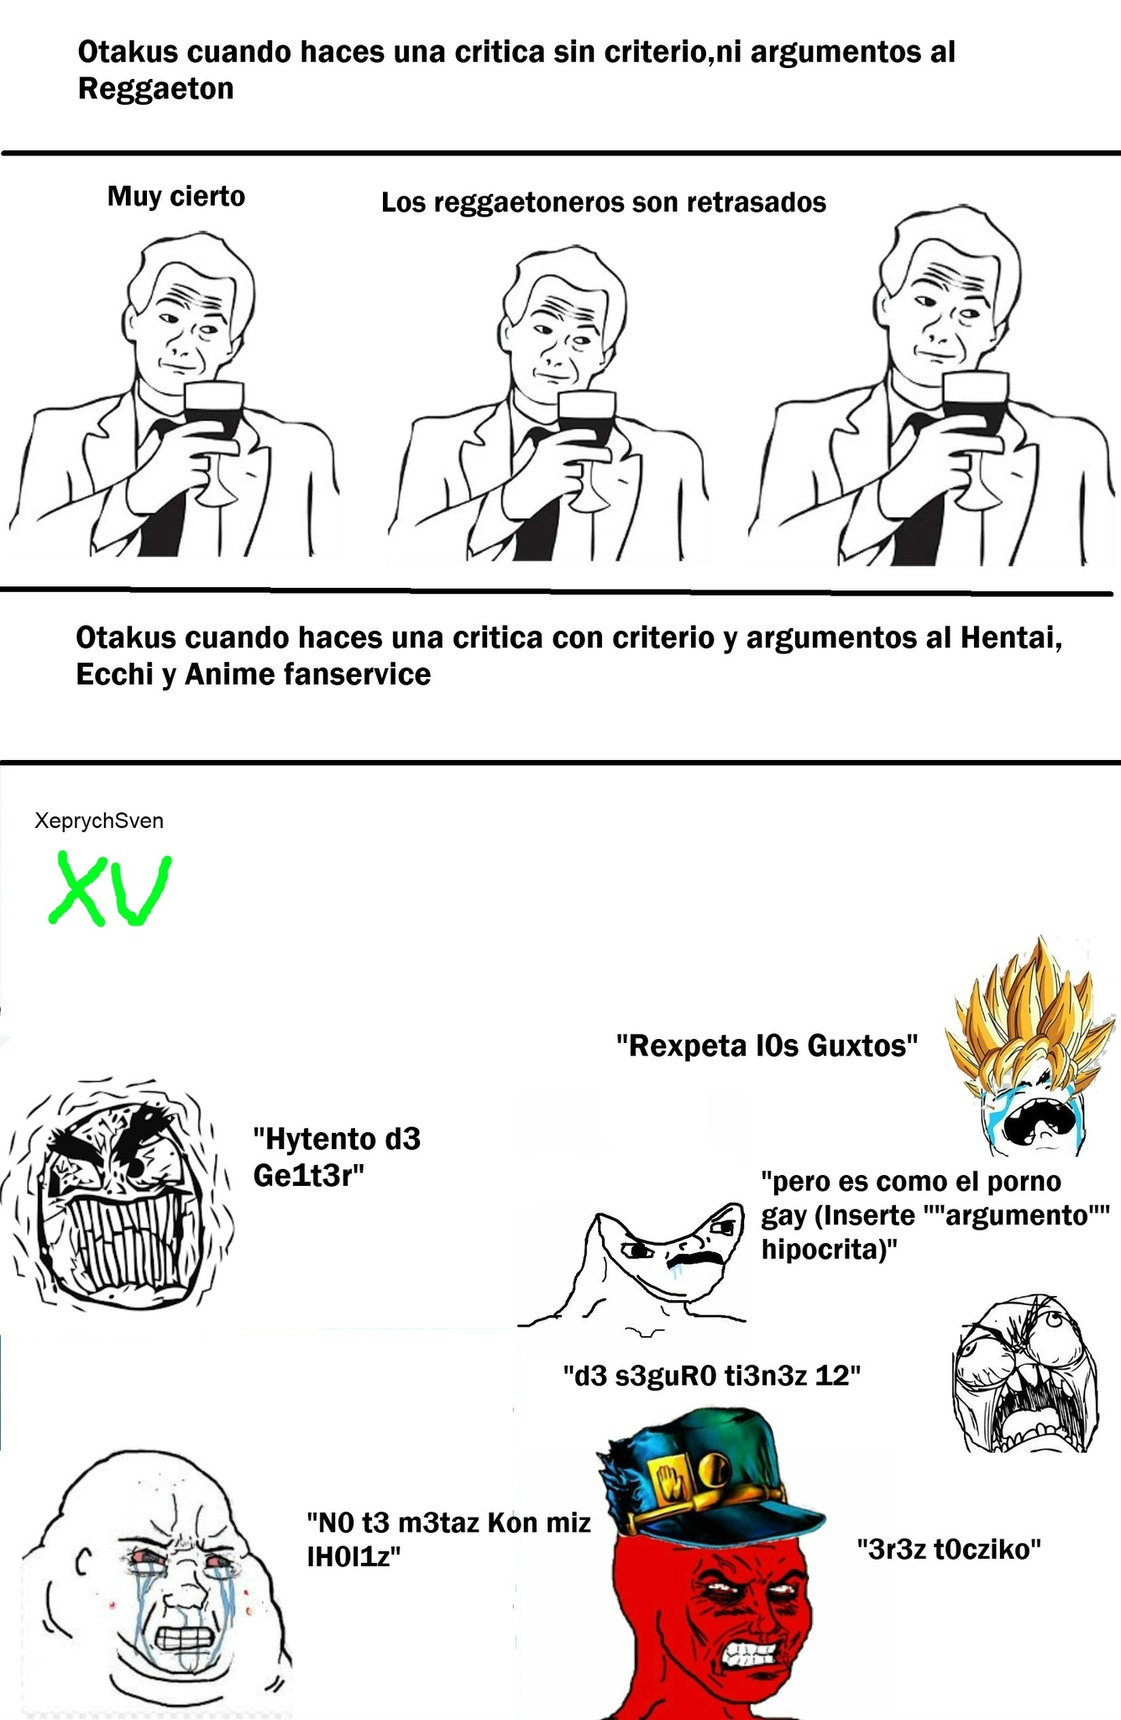 Logica de los otakus "Odiar el reggaeton= Bien. Odiar generos como el Hentai,Ecchi,etc= 3r3z Toczic0" - meme